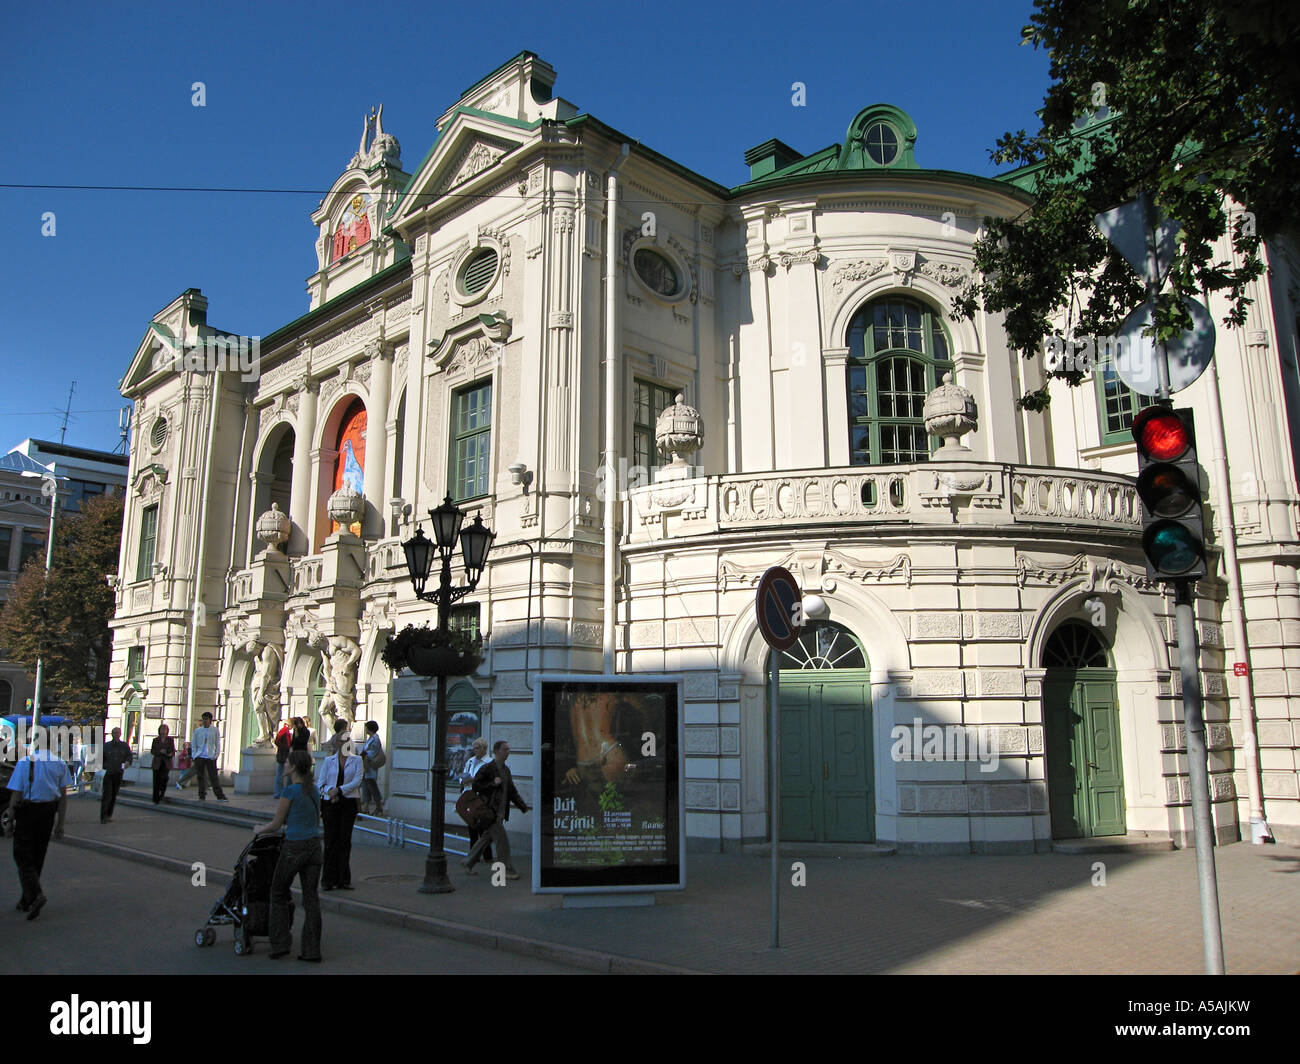 Latvia’s National Theatre, Nacionalais teatris, in the country’s capital Riga Stock Photo